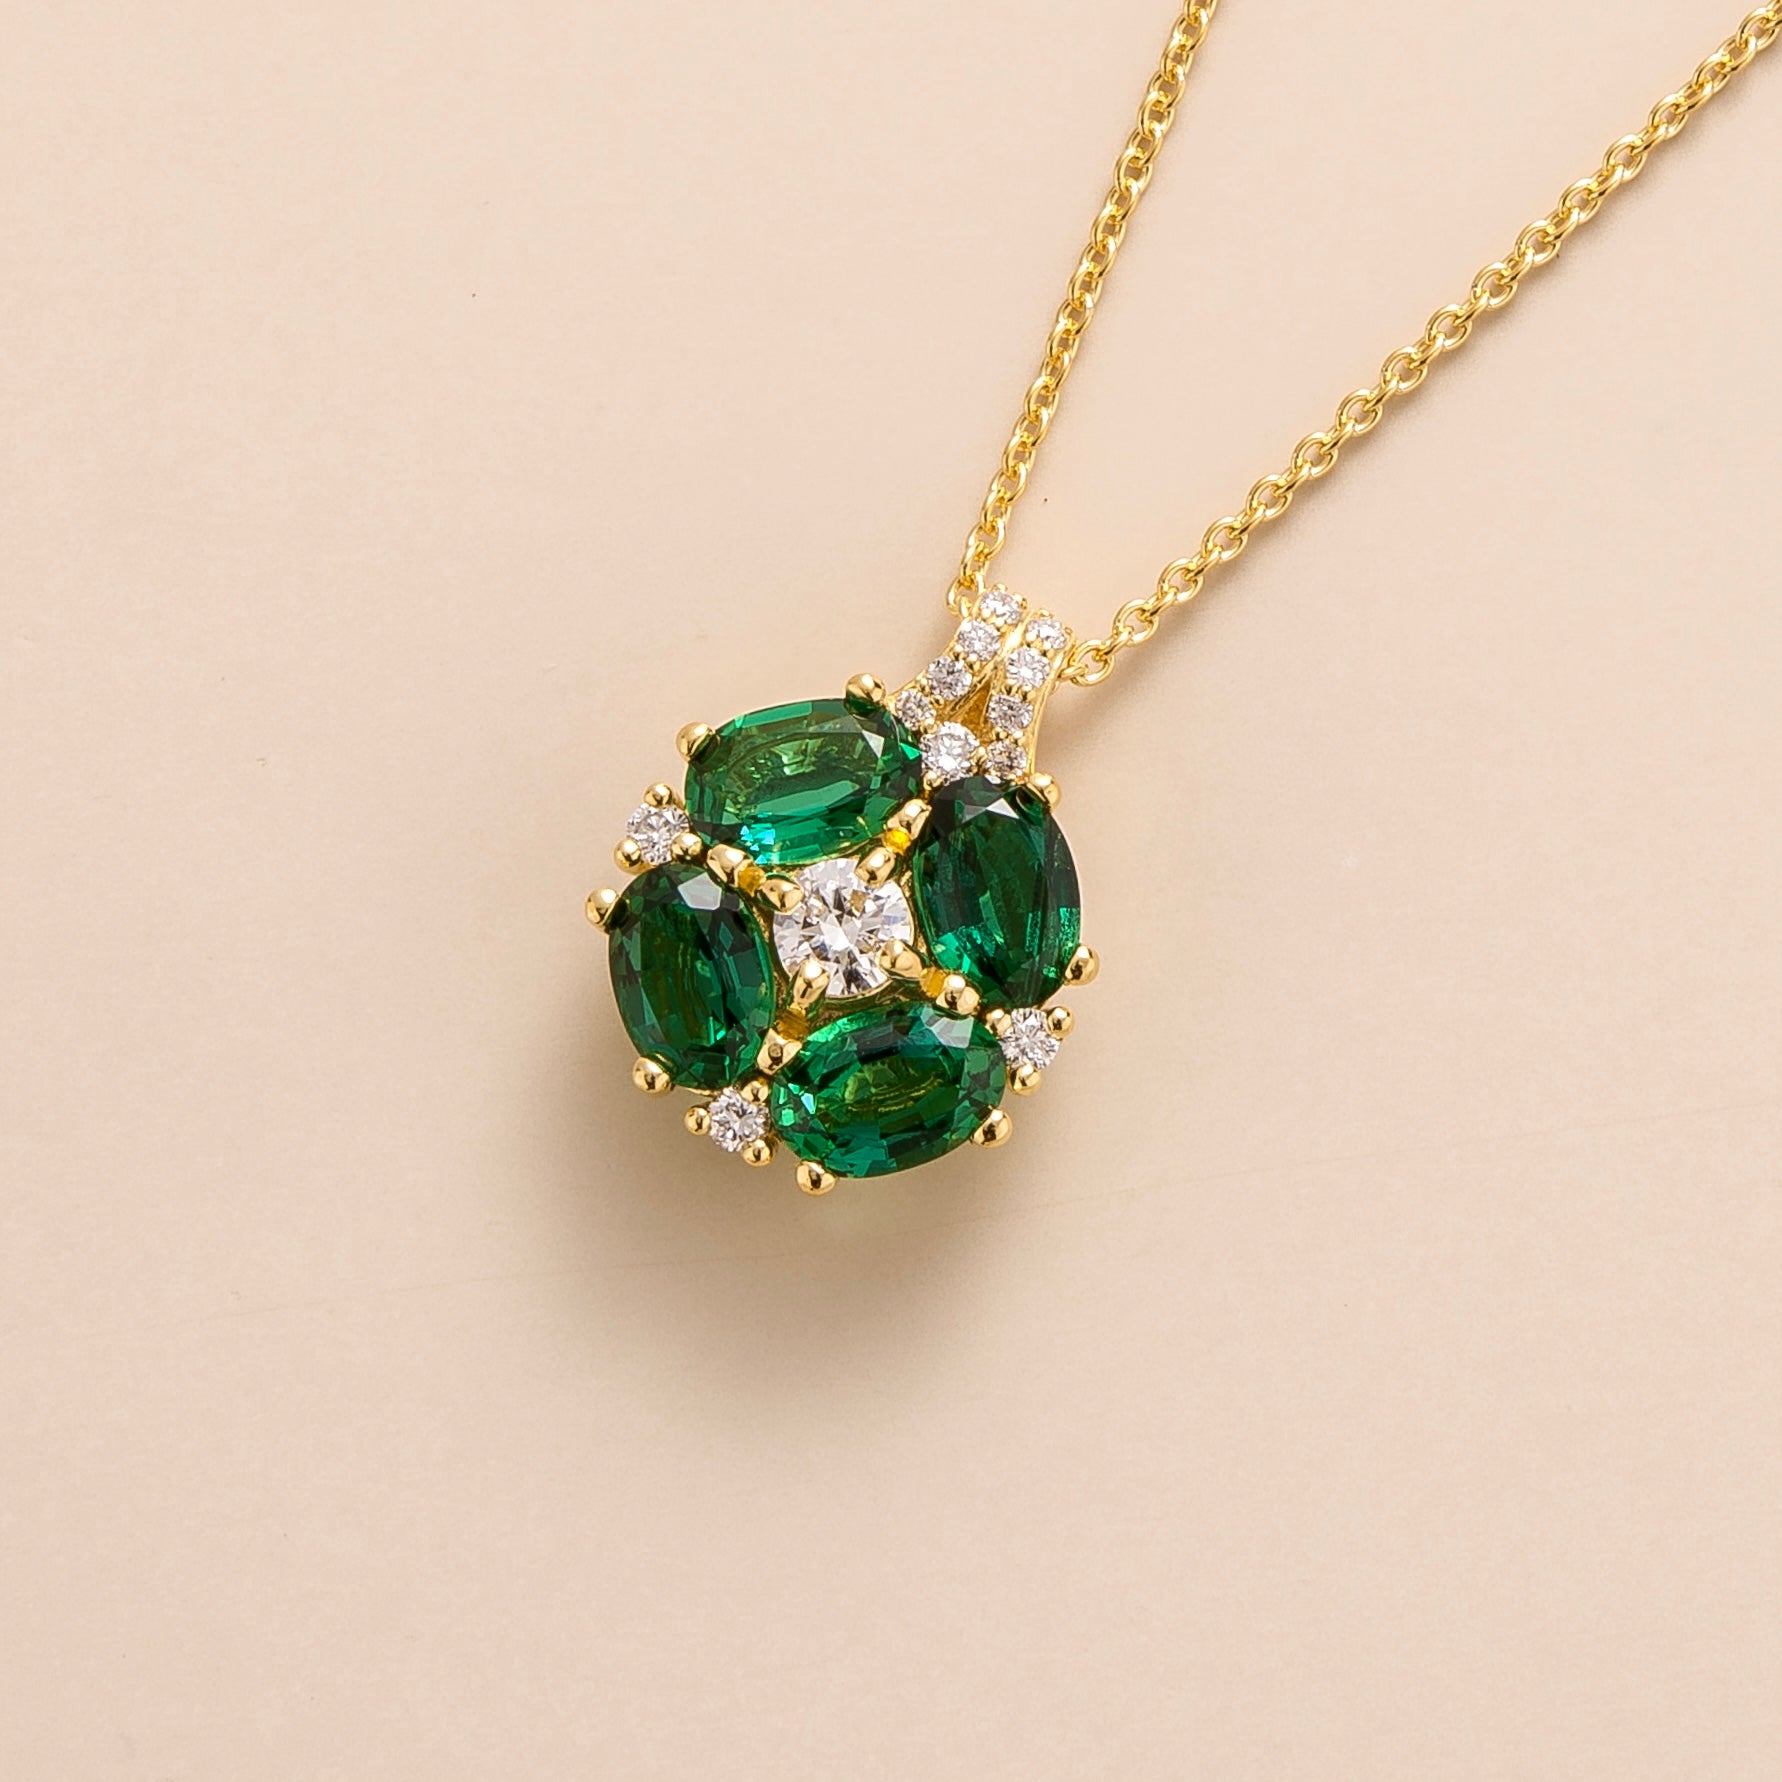 Buy Online Juvetti Bespoke Jewellery London Pristi Gold Necklace Diamond and Emerald